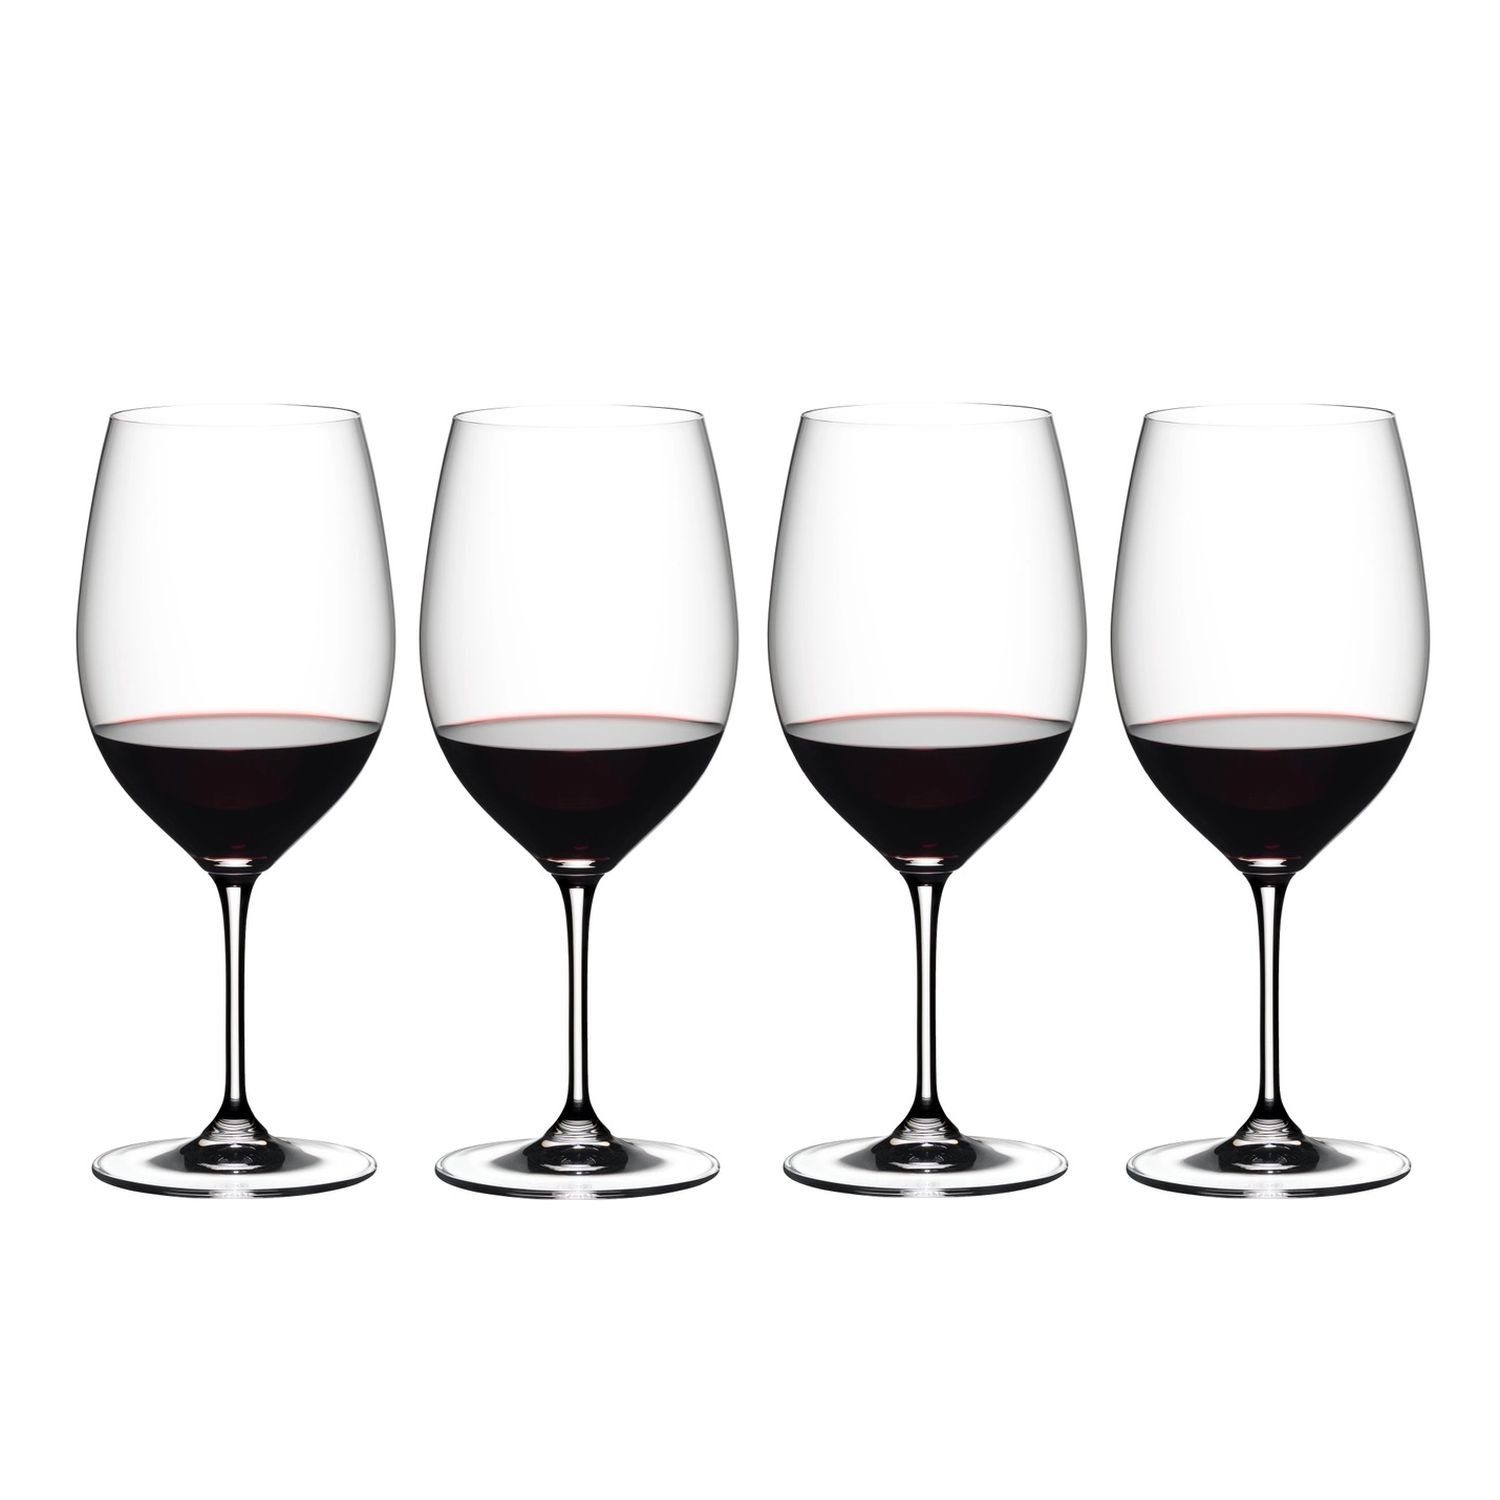 RIEDEL THE WINE GLASS COMPANY Weinglas Riedel Vinum Cabernet Merlot 4er Set, Kristallglas